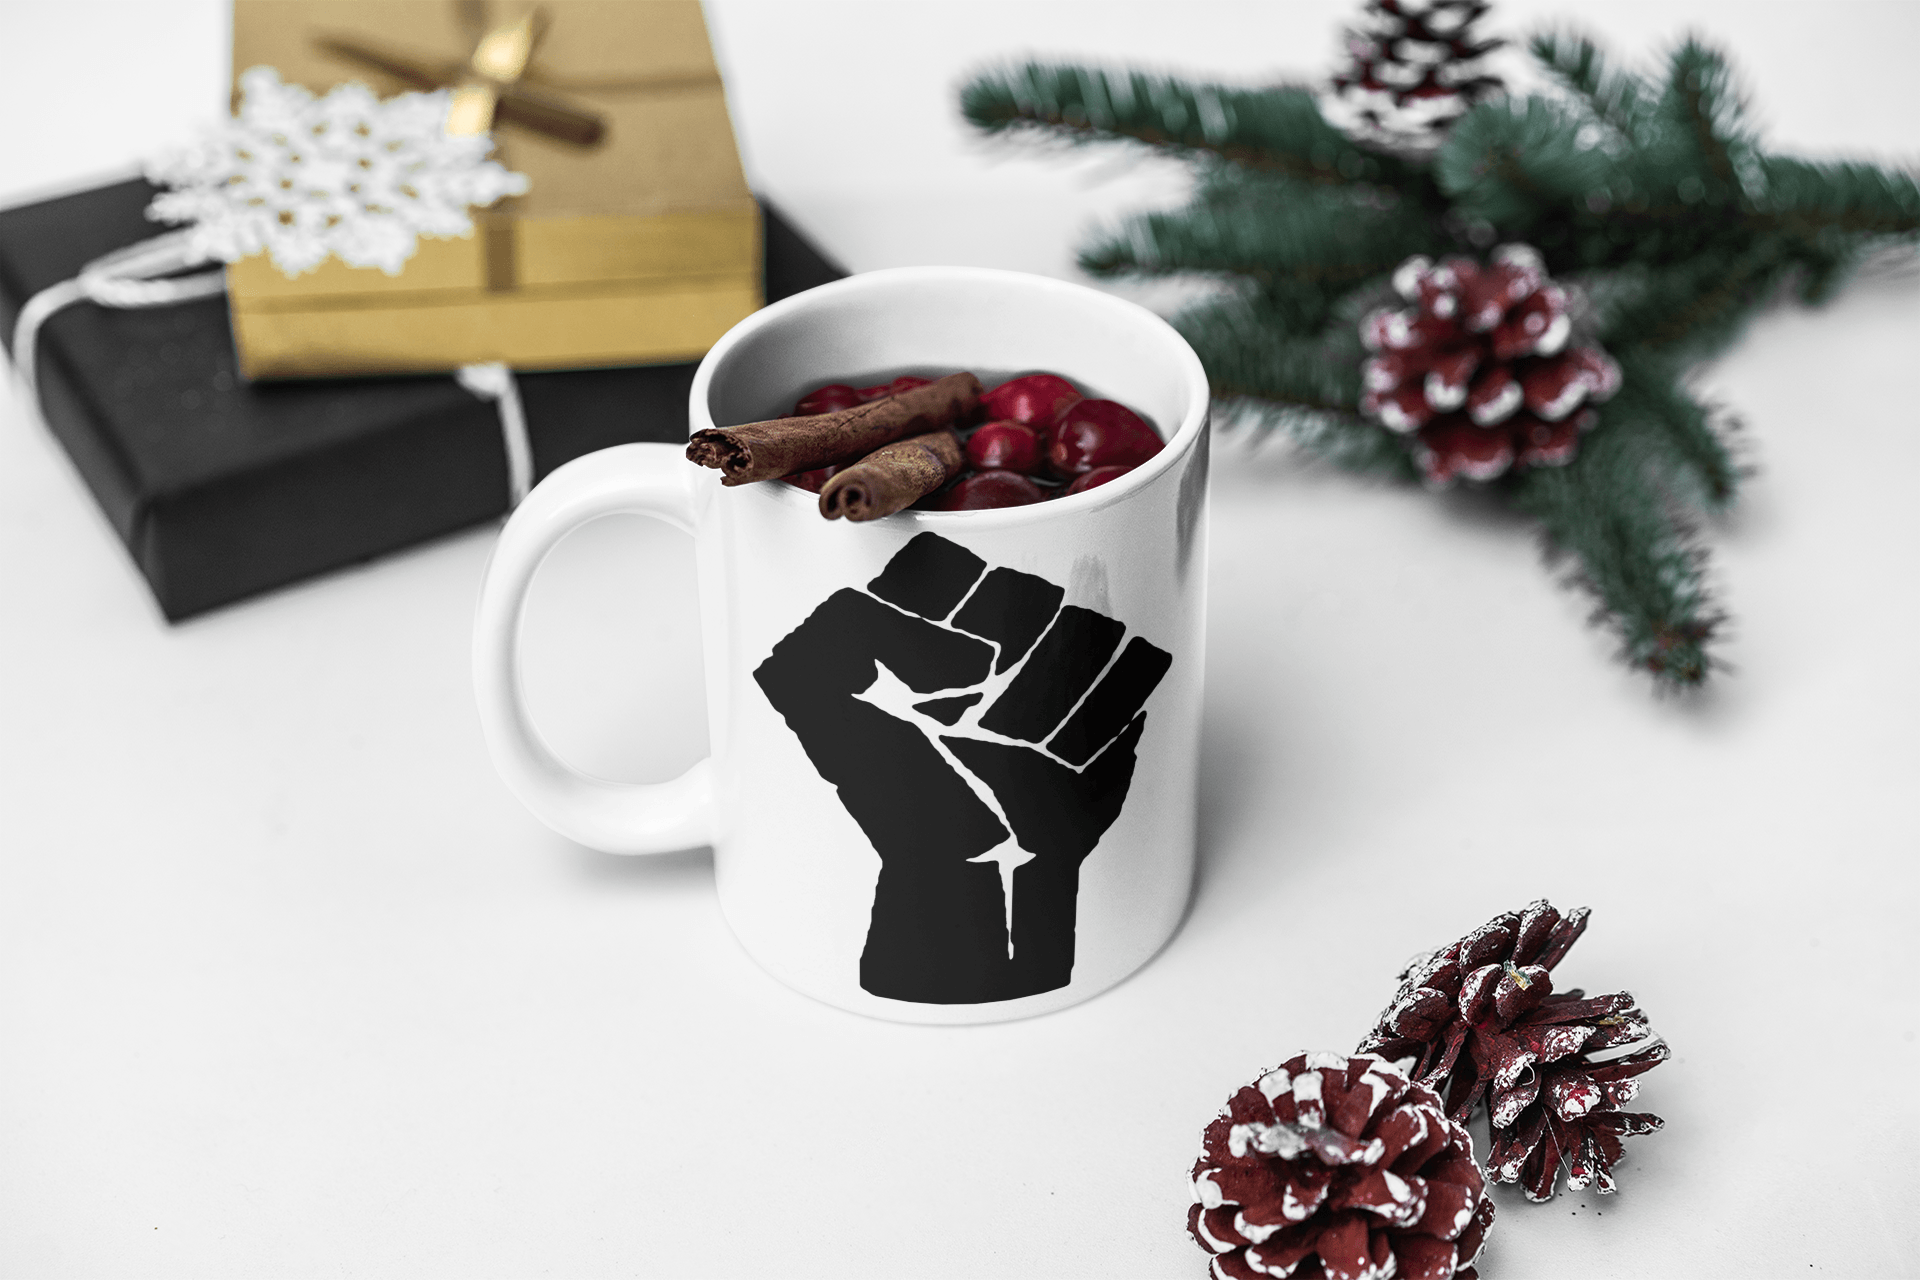 Black Power Fist Mug - Chocolate Ancestor